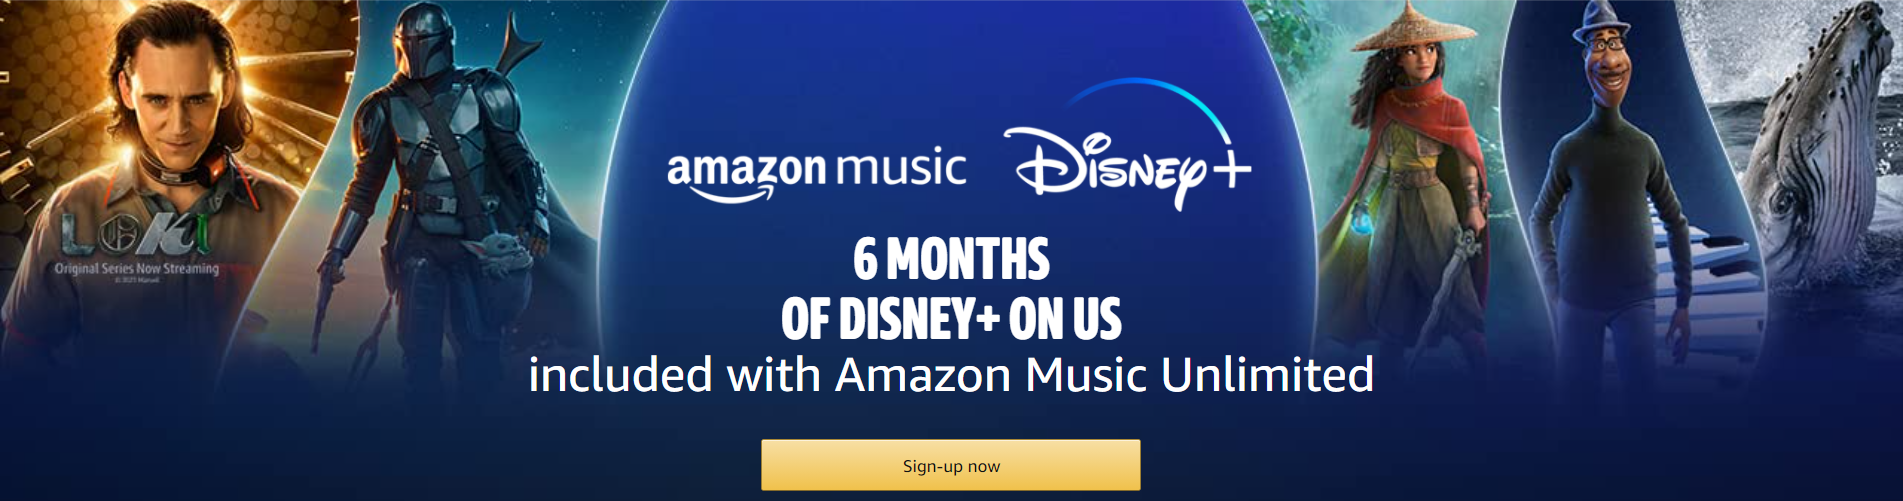 https://images.squarespace-cdn.com/content/v1/5dbb2d8b81d8b06492db17b0/1625782312502-LZ6E13CR3SBLJLYZWO56/Amazon+Music+Disney+Plus+deal+ad.PNG